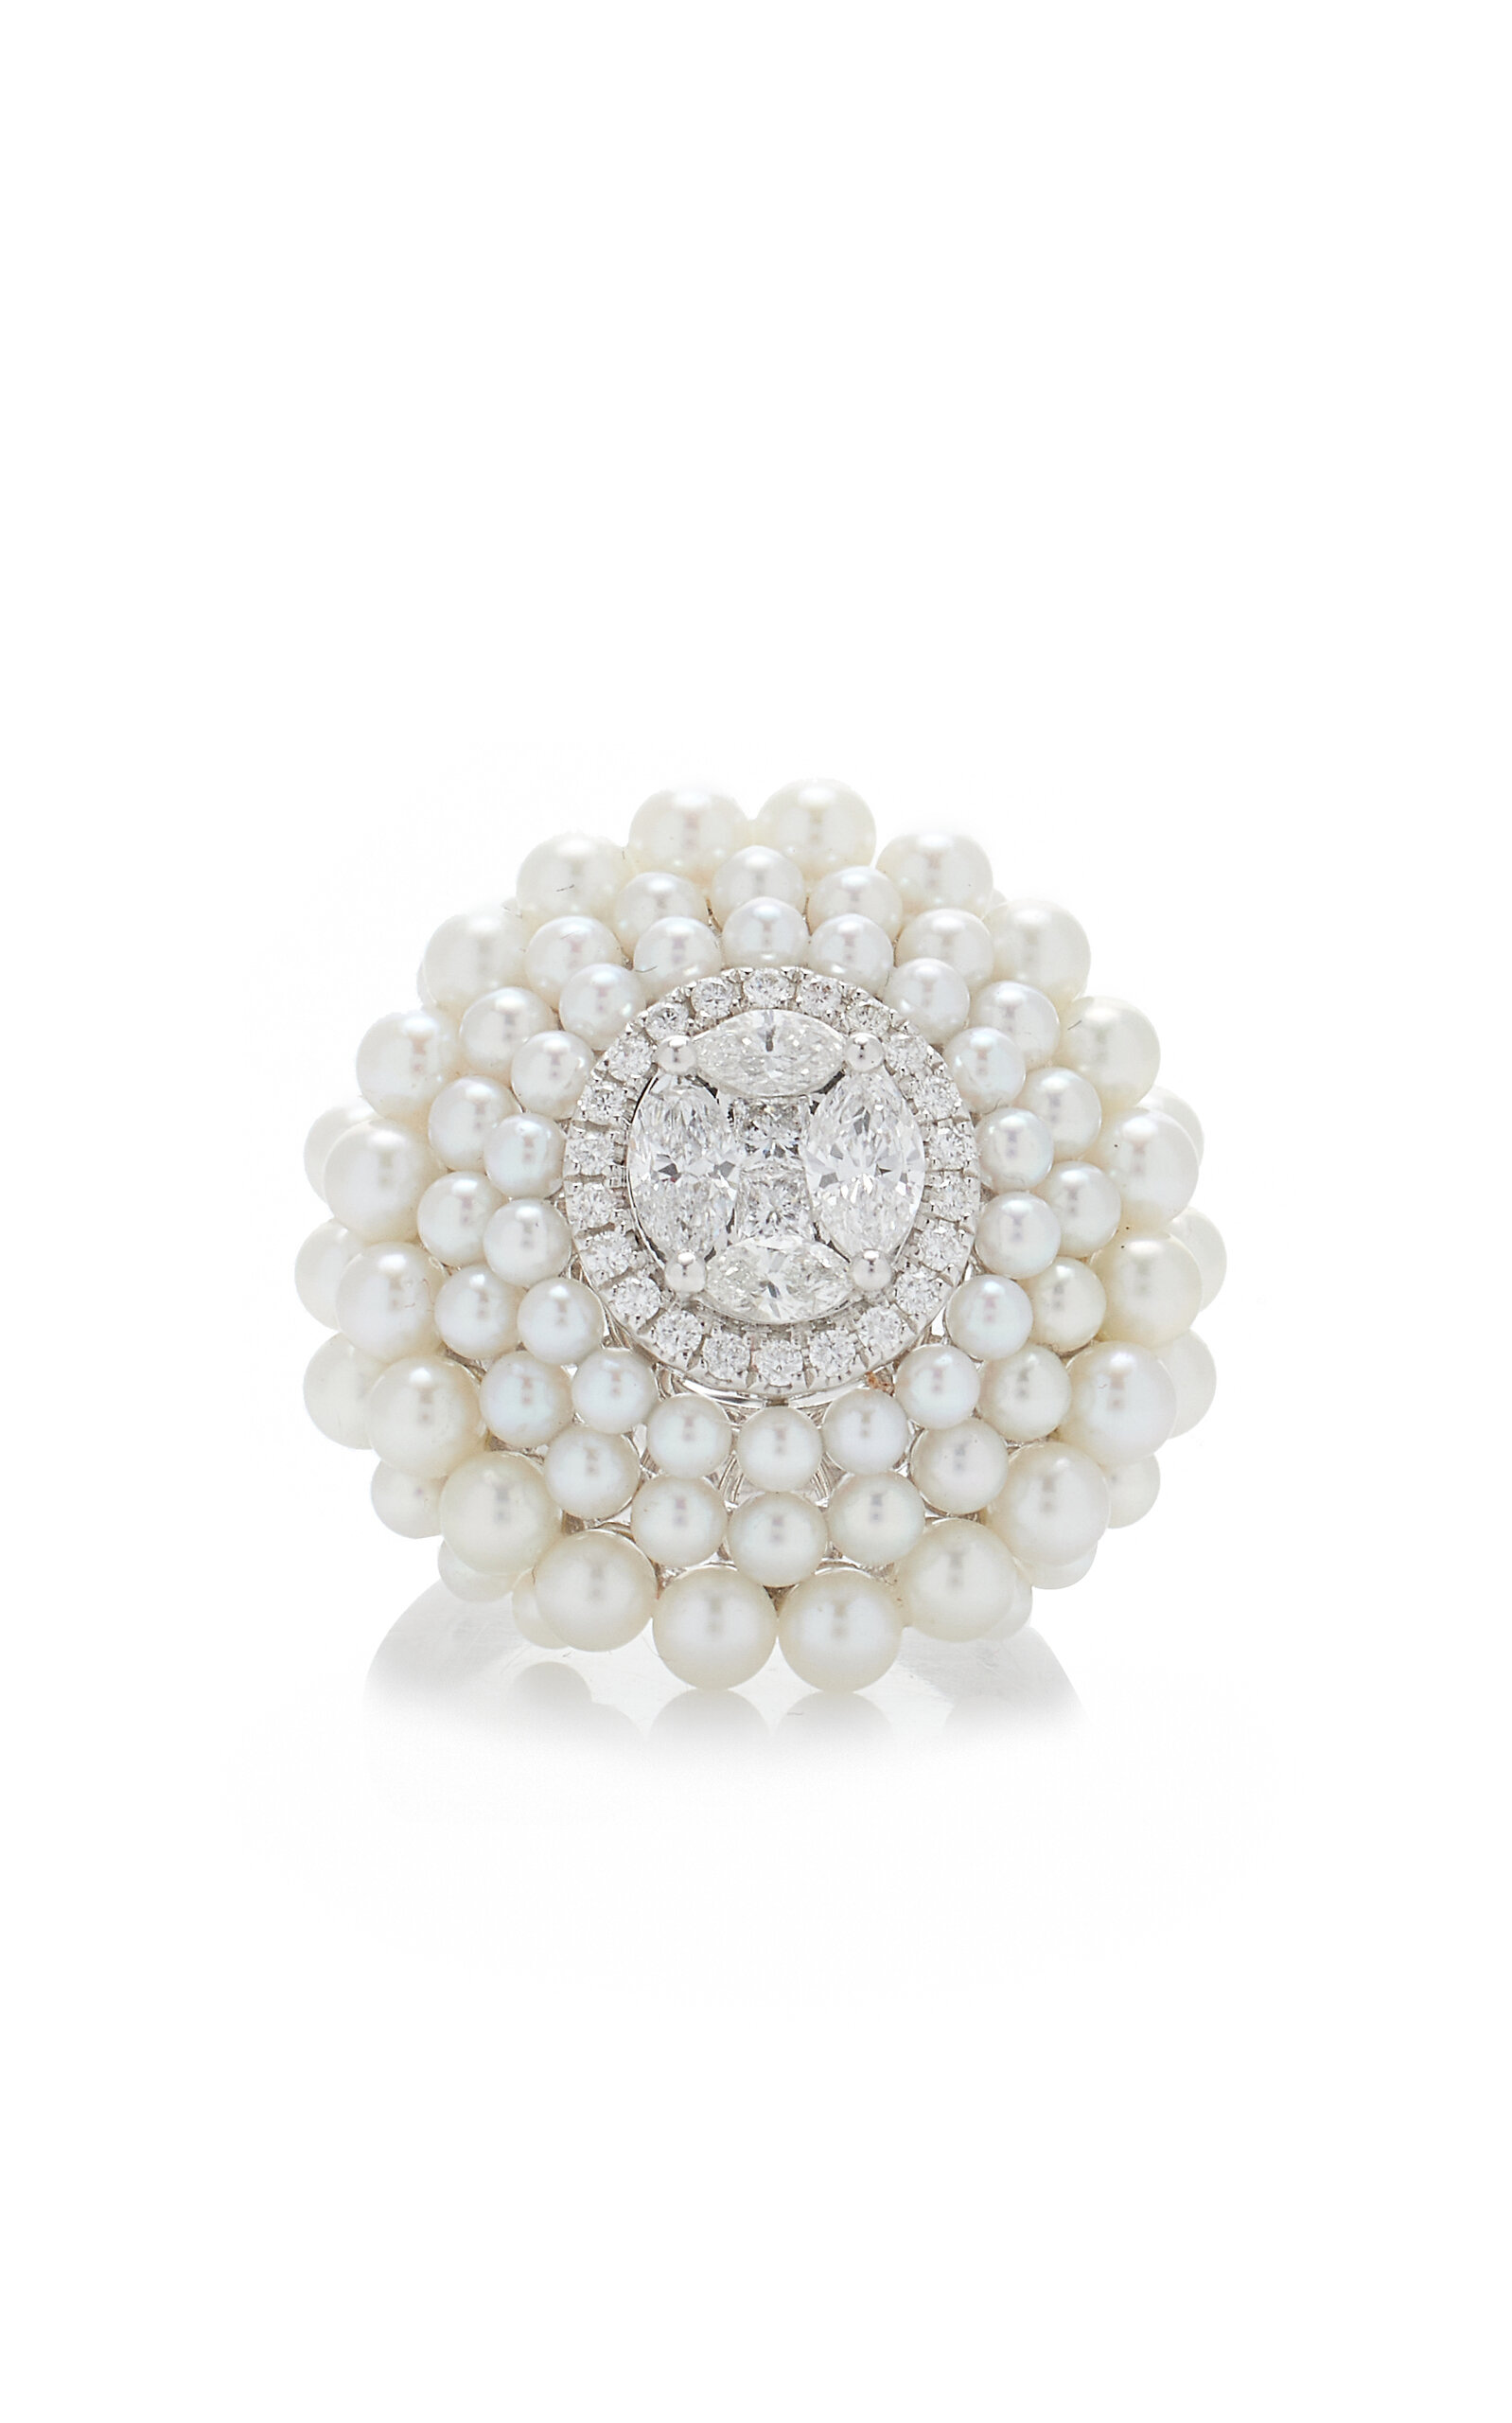 Amrapali One of a Kind 18K White Gold Pearl & Diamond Mukta Ring